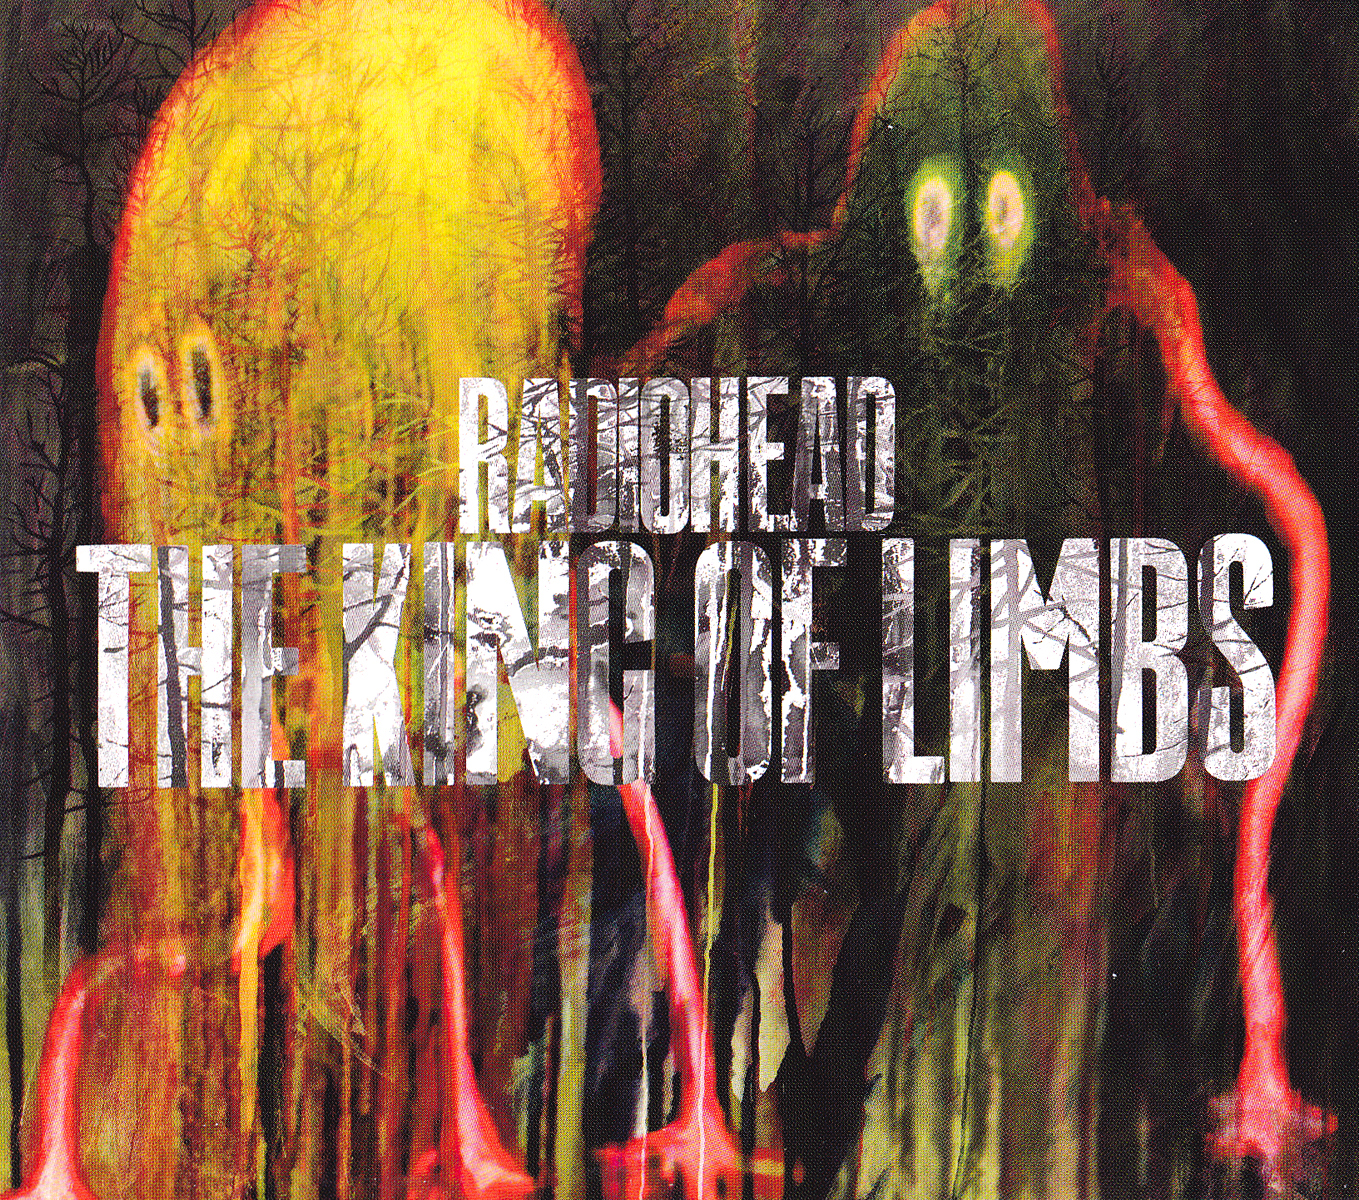 Underground Music Radiohead The King of Limbs Images